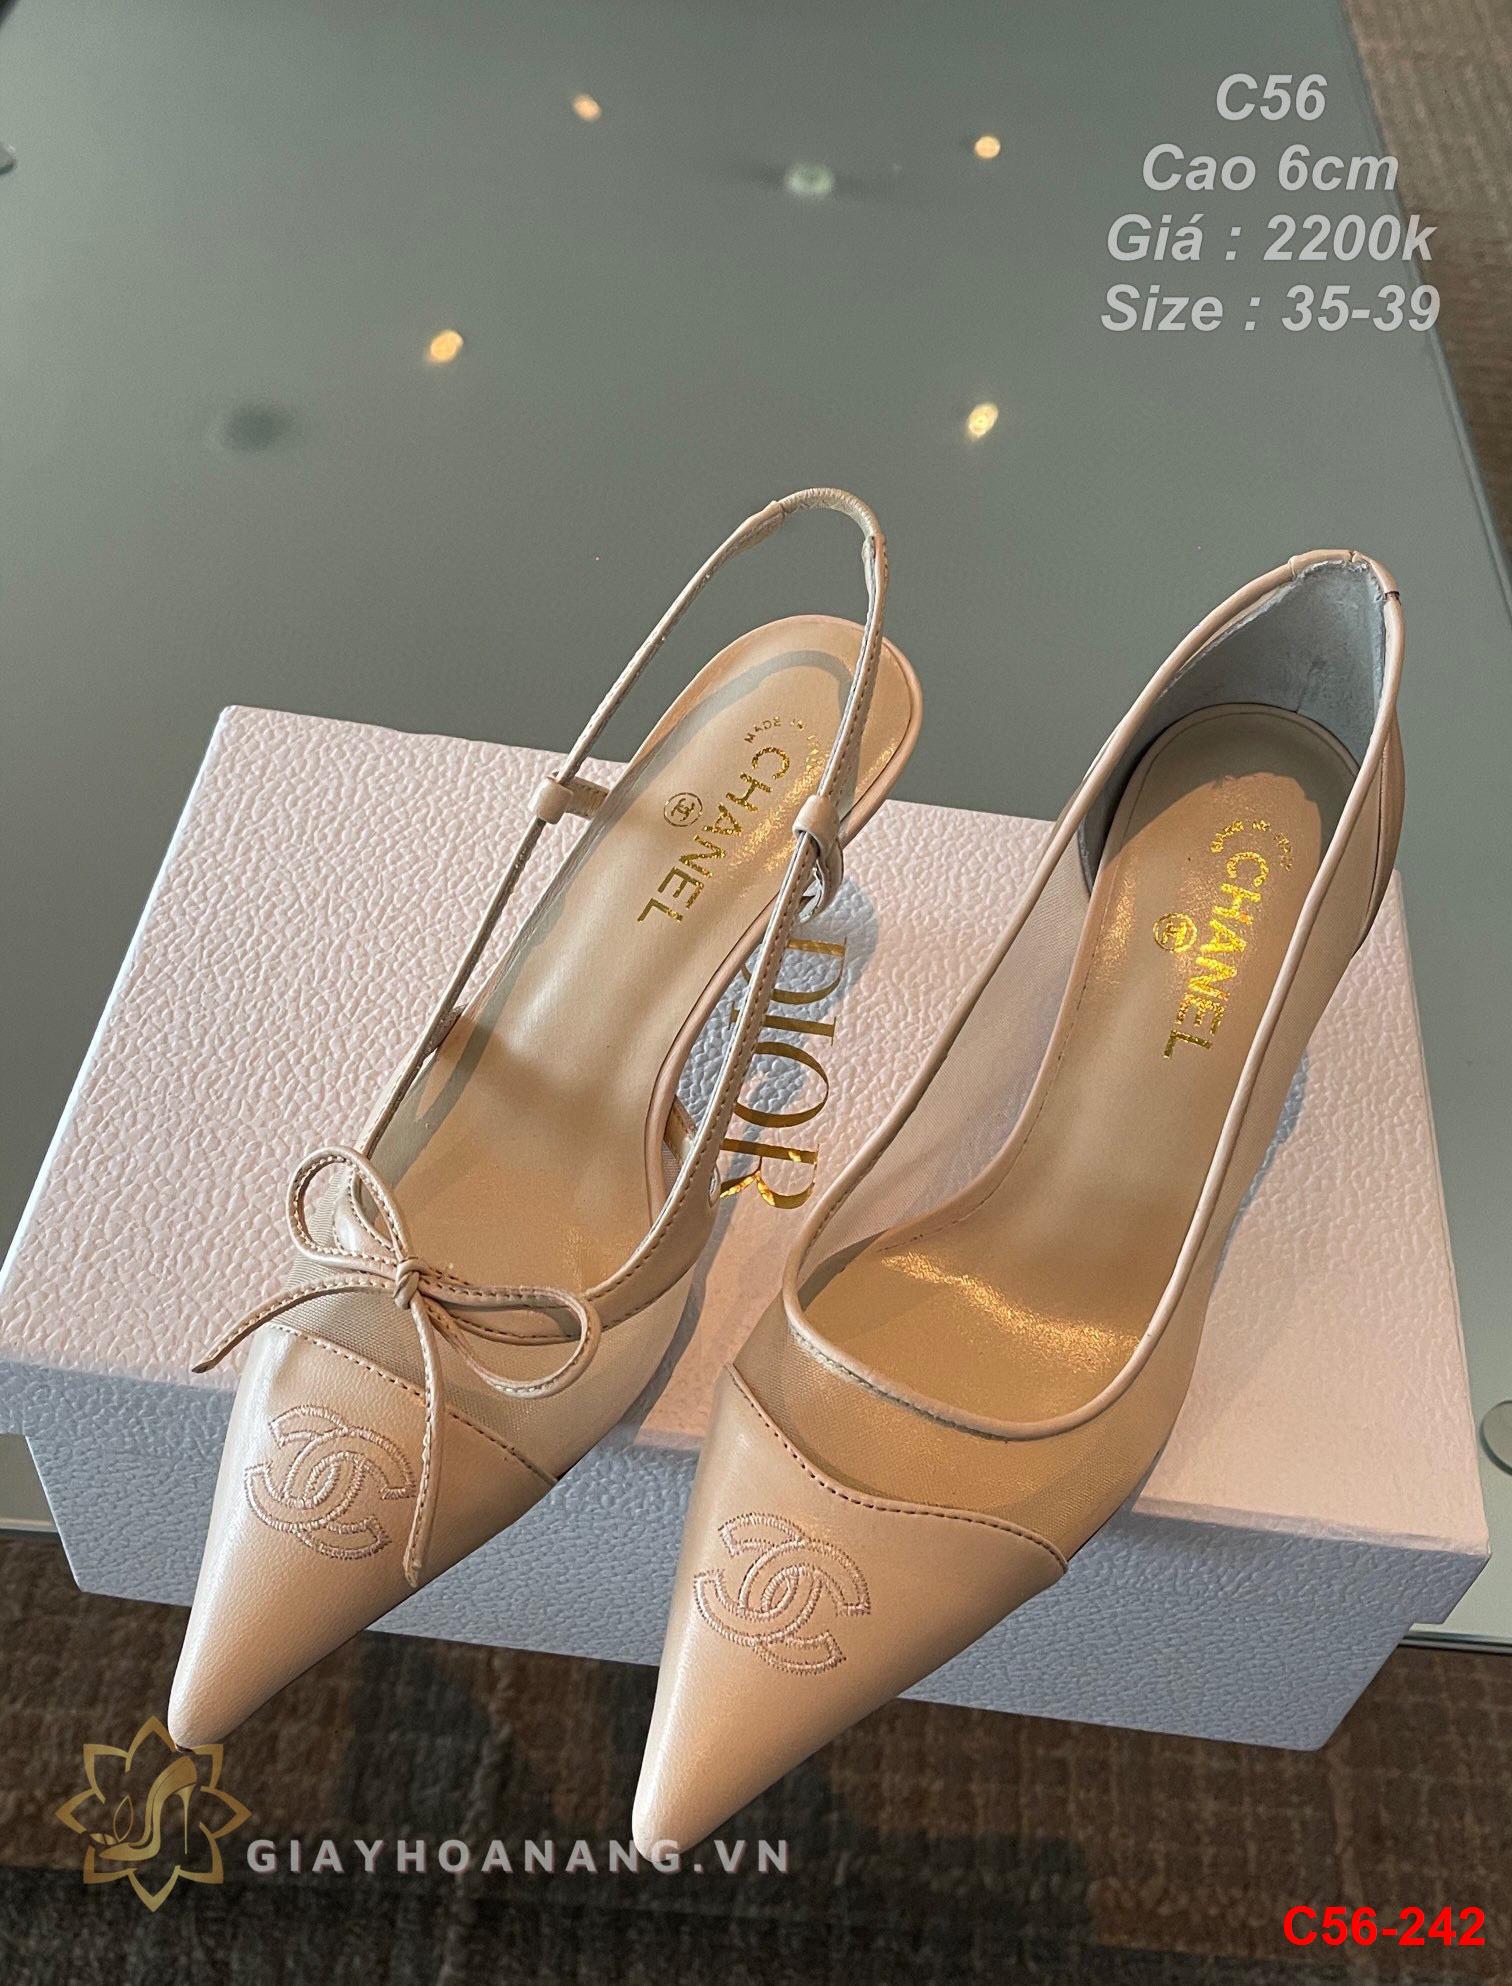 C56-242 Chanel sandal cao 6cm siêu cấp